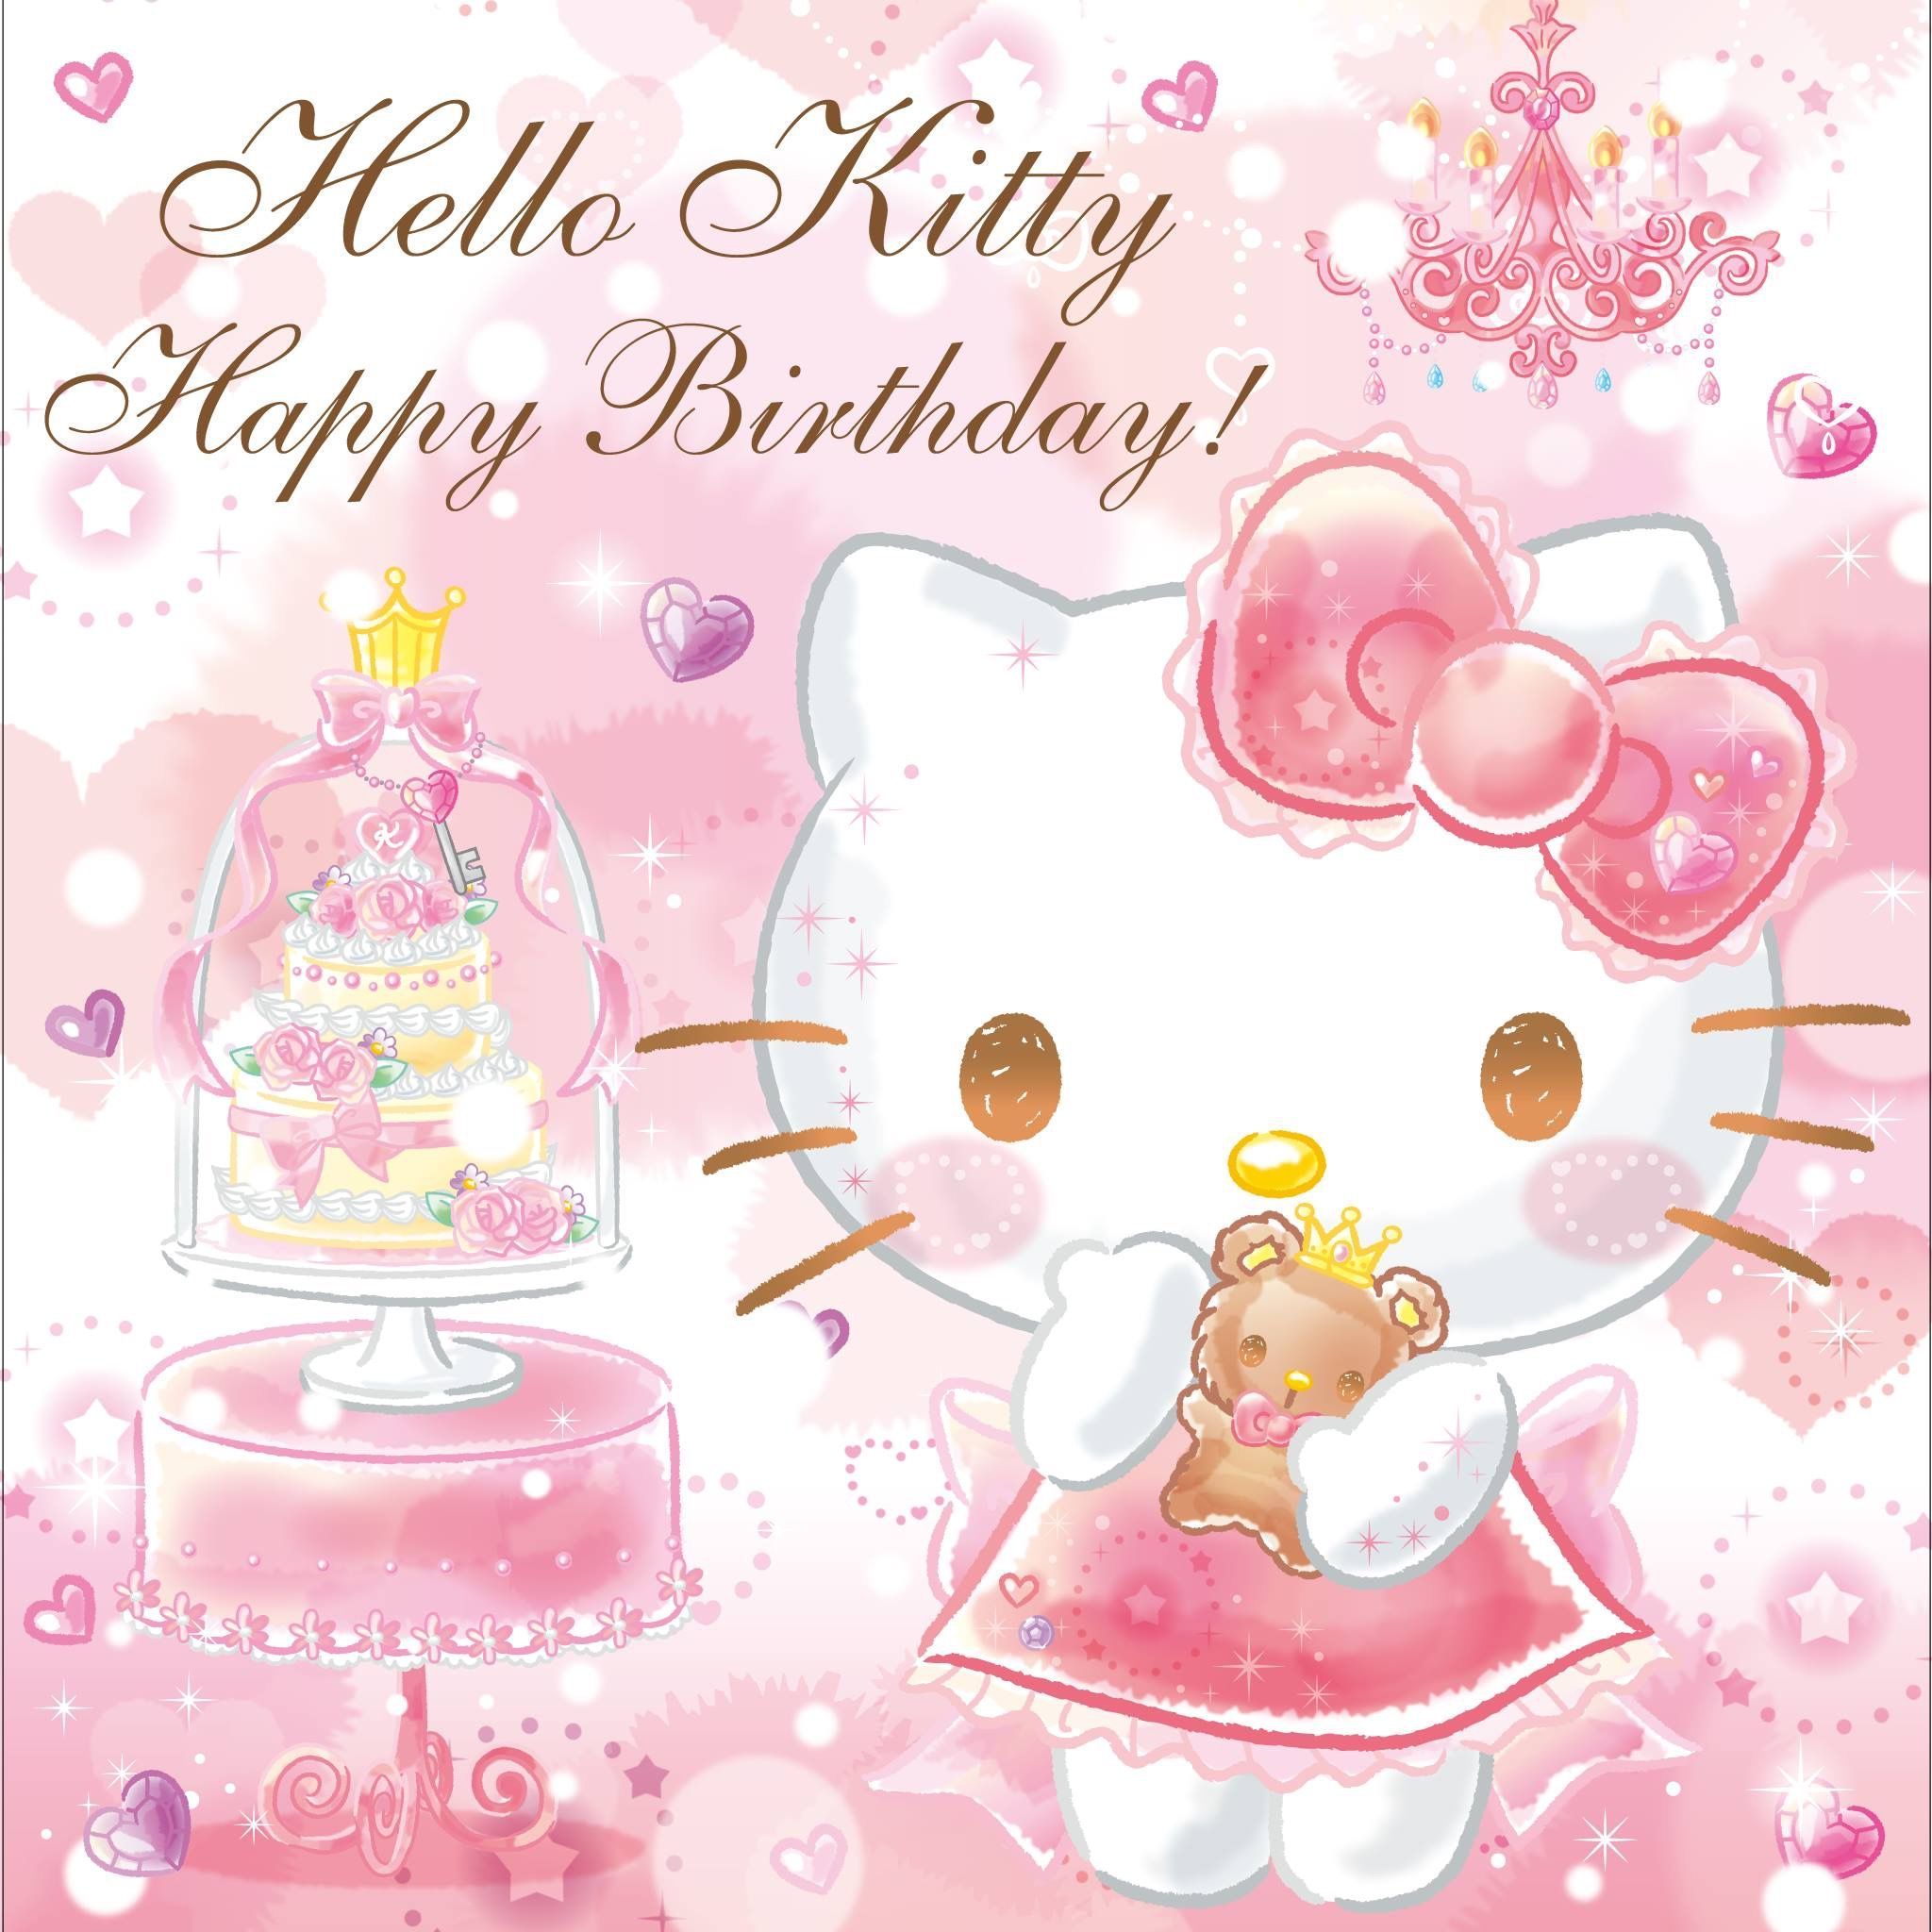 Online Store E Gift Card. Hello Kitty Birthday, Hello Kitty Image, Hello Kitty